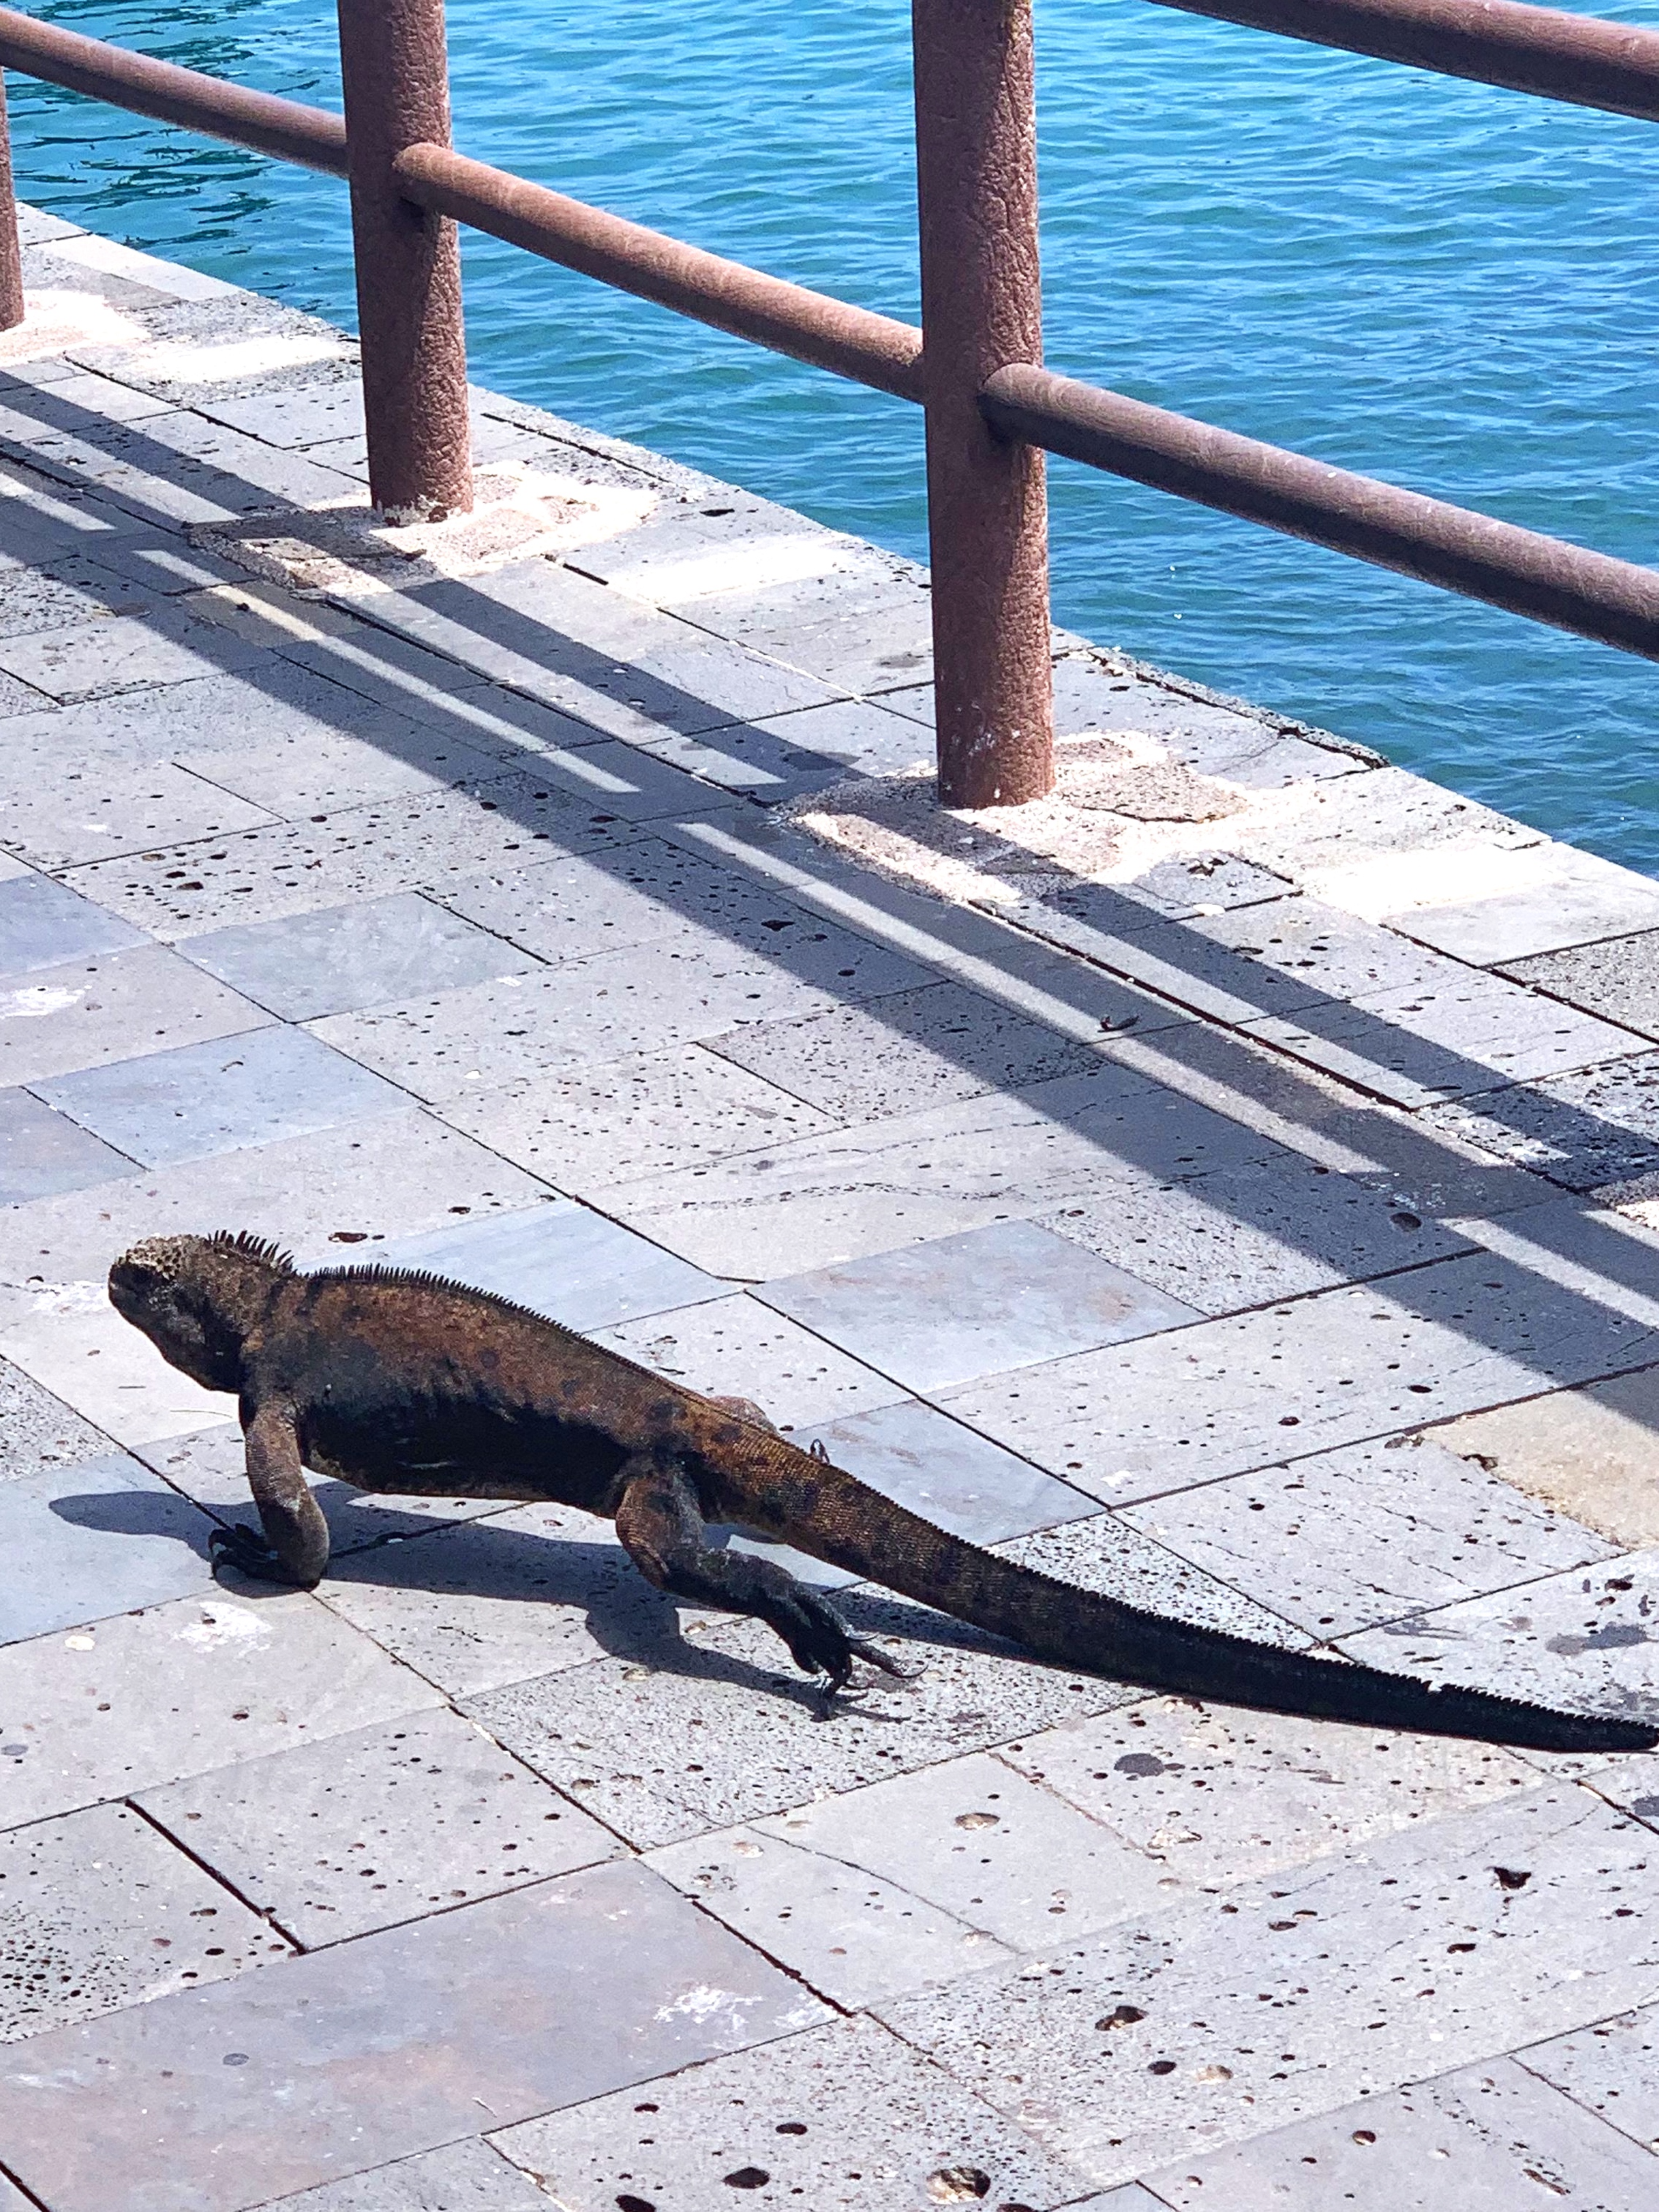  Sharing the sidewalk with marine iguanas.  